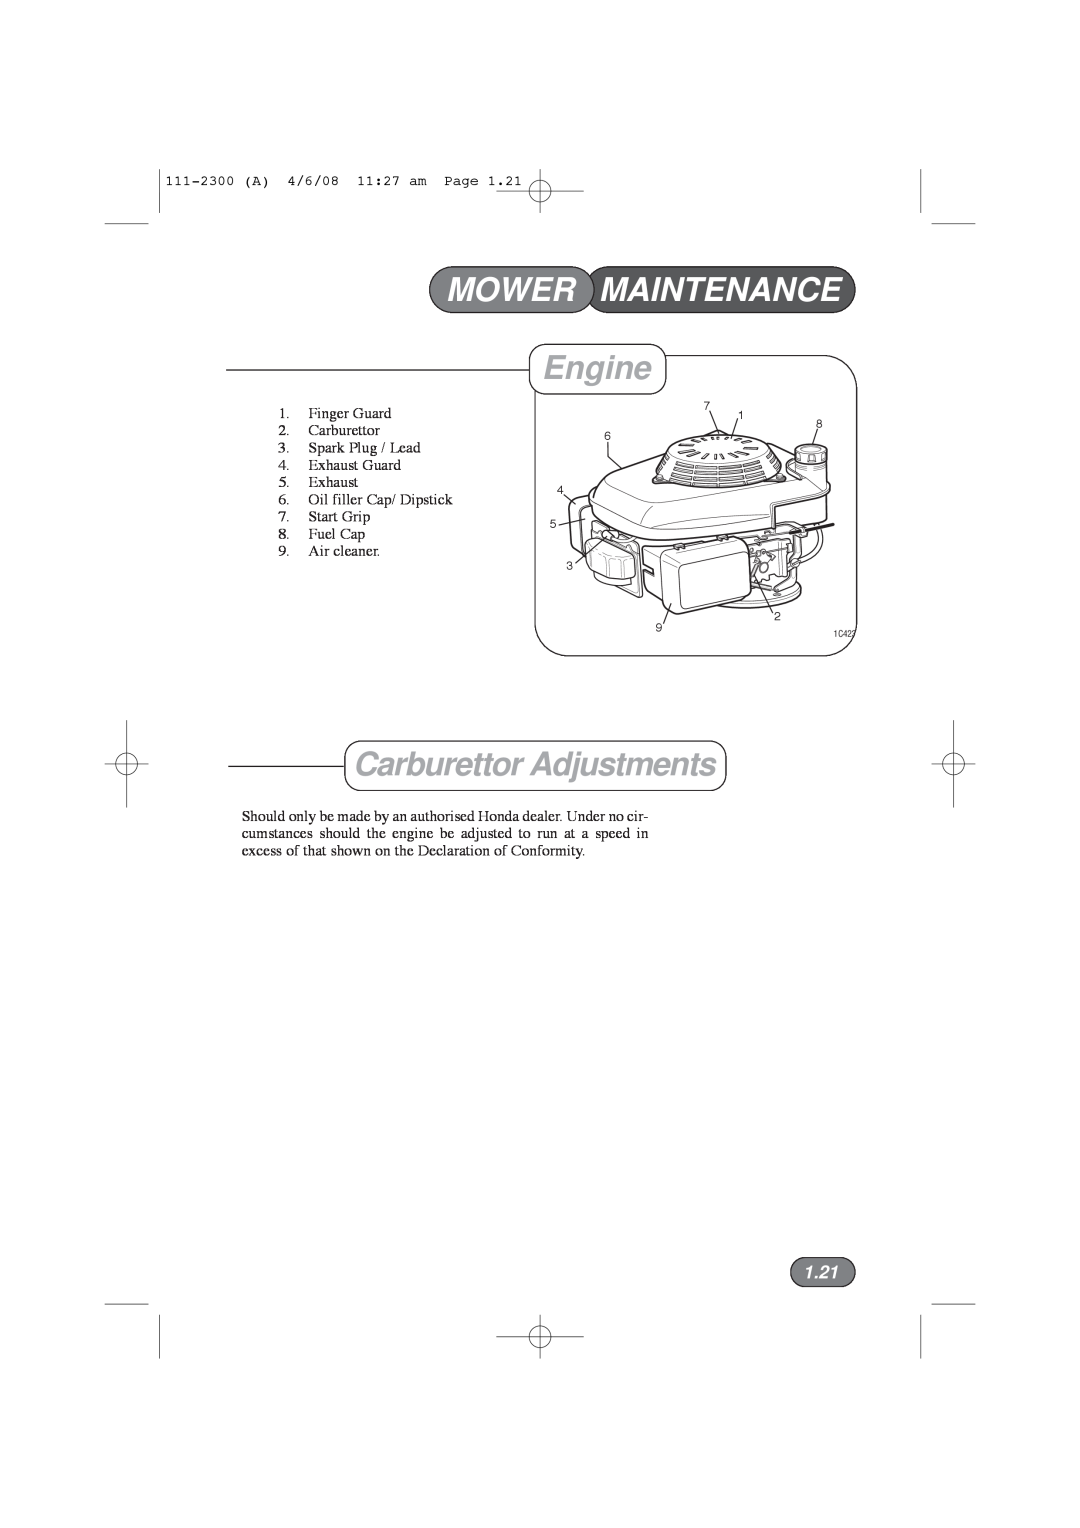 Hayter Mowers 43F manual Mower Maintenance, Engine, Carburettor Adjustments, 1.21 